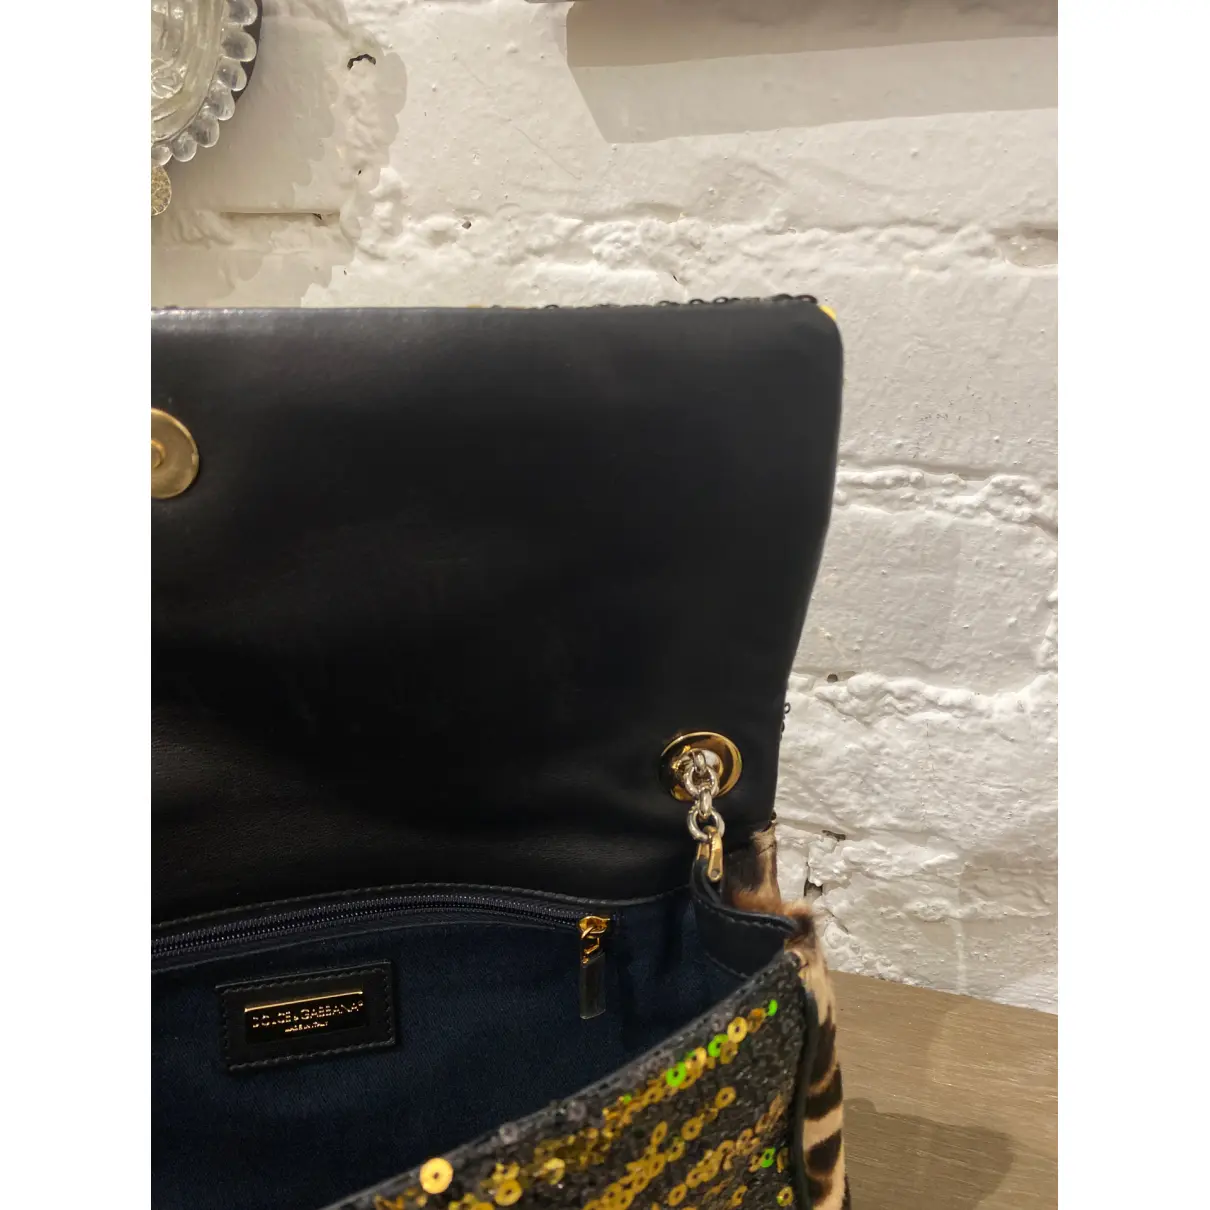 Miss Charles glitter handbag Dolce & Gabbana